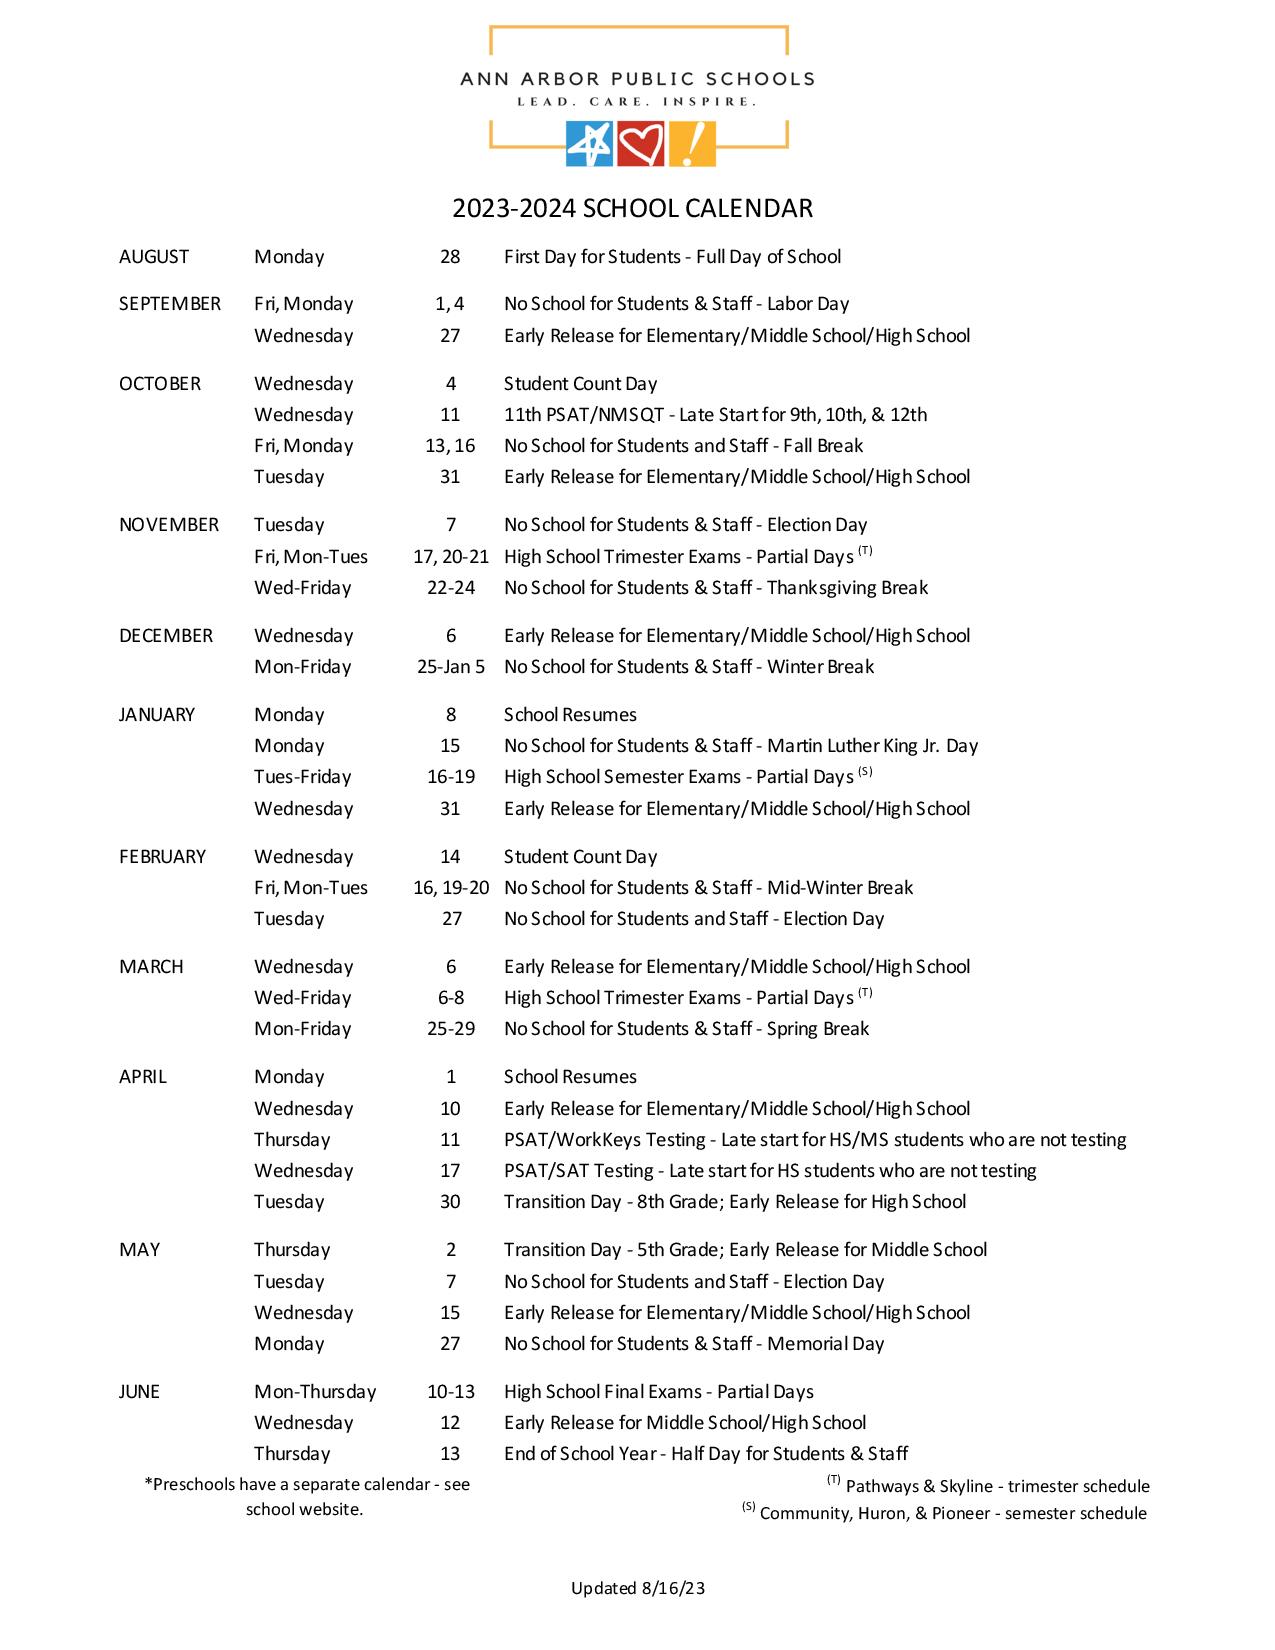 Ann Arbor Public Schools Calendar 2024 (Holiday Dates)